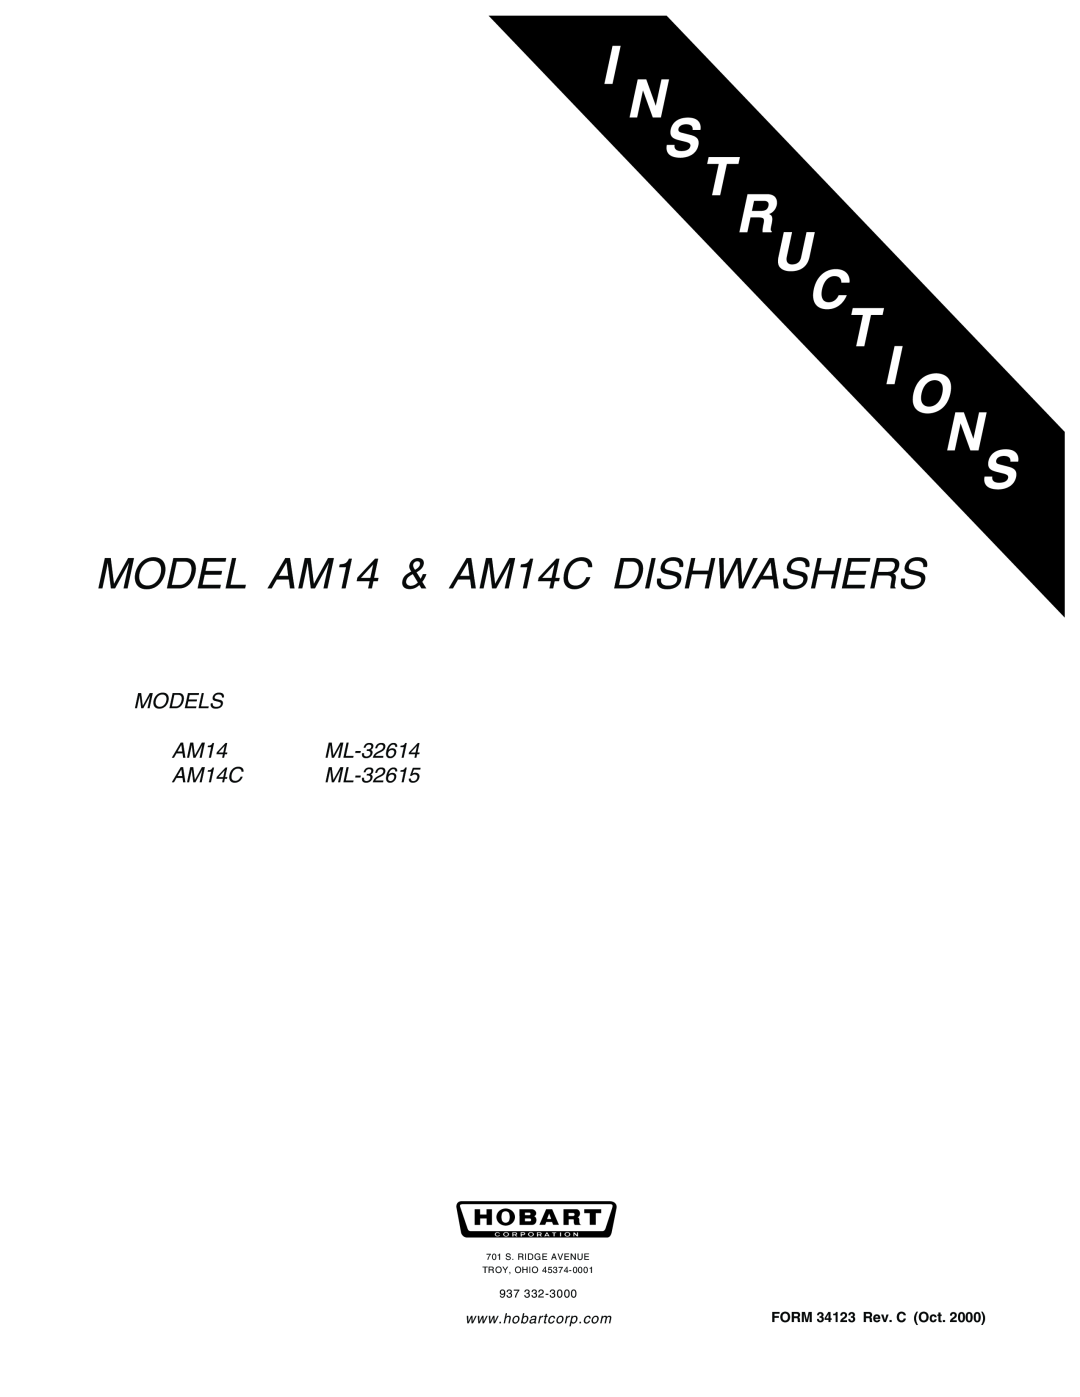 Hobart manual MODEL AM14 & AM14C DISHWASHERS, MODELS AM14 ML-32614 AM14C ML-32615, FORM 34123 Rev. C Oct 